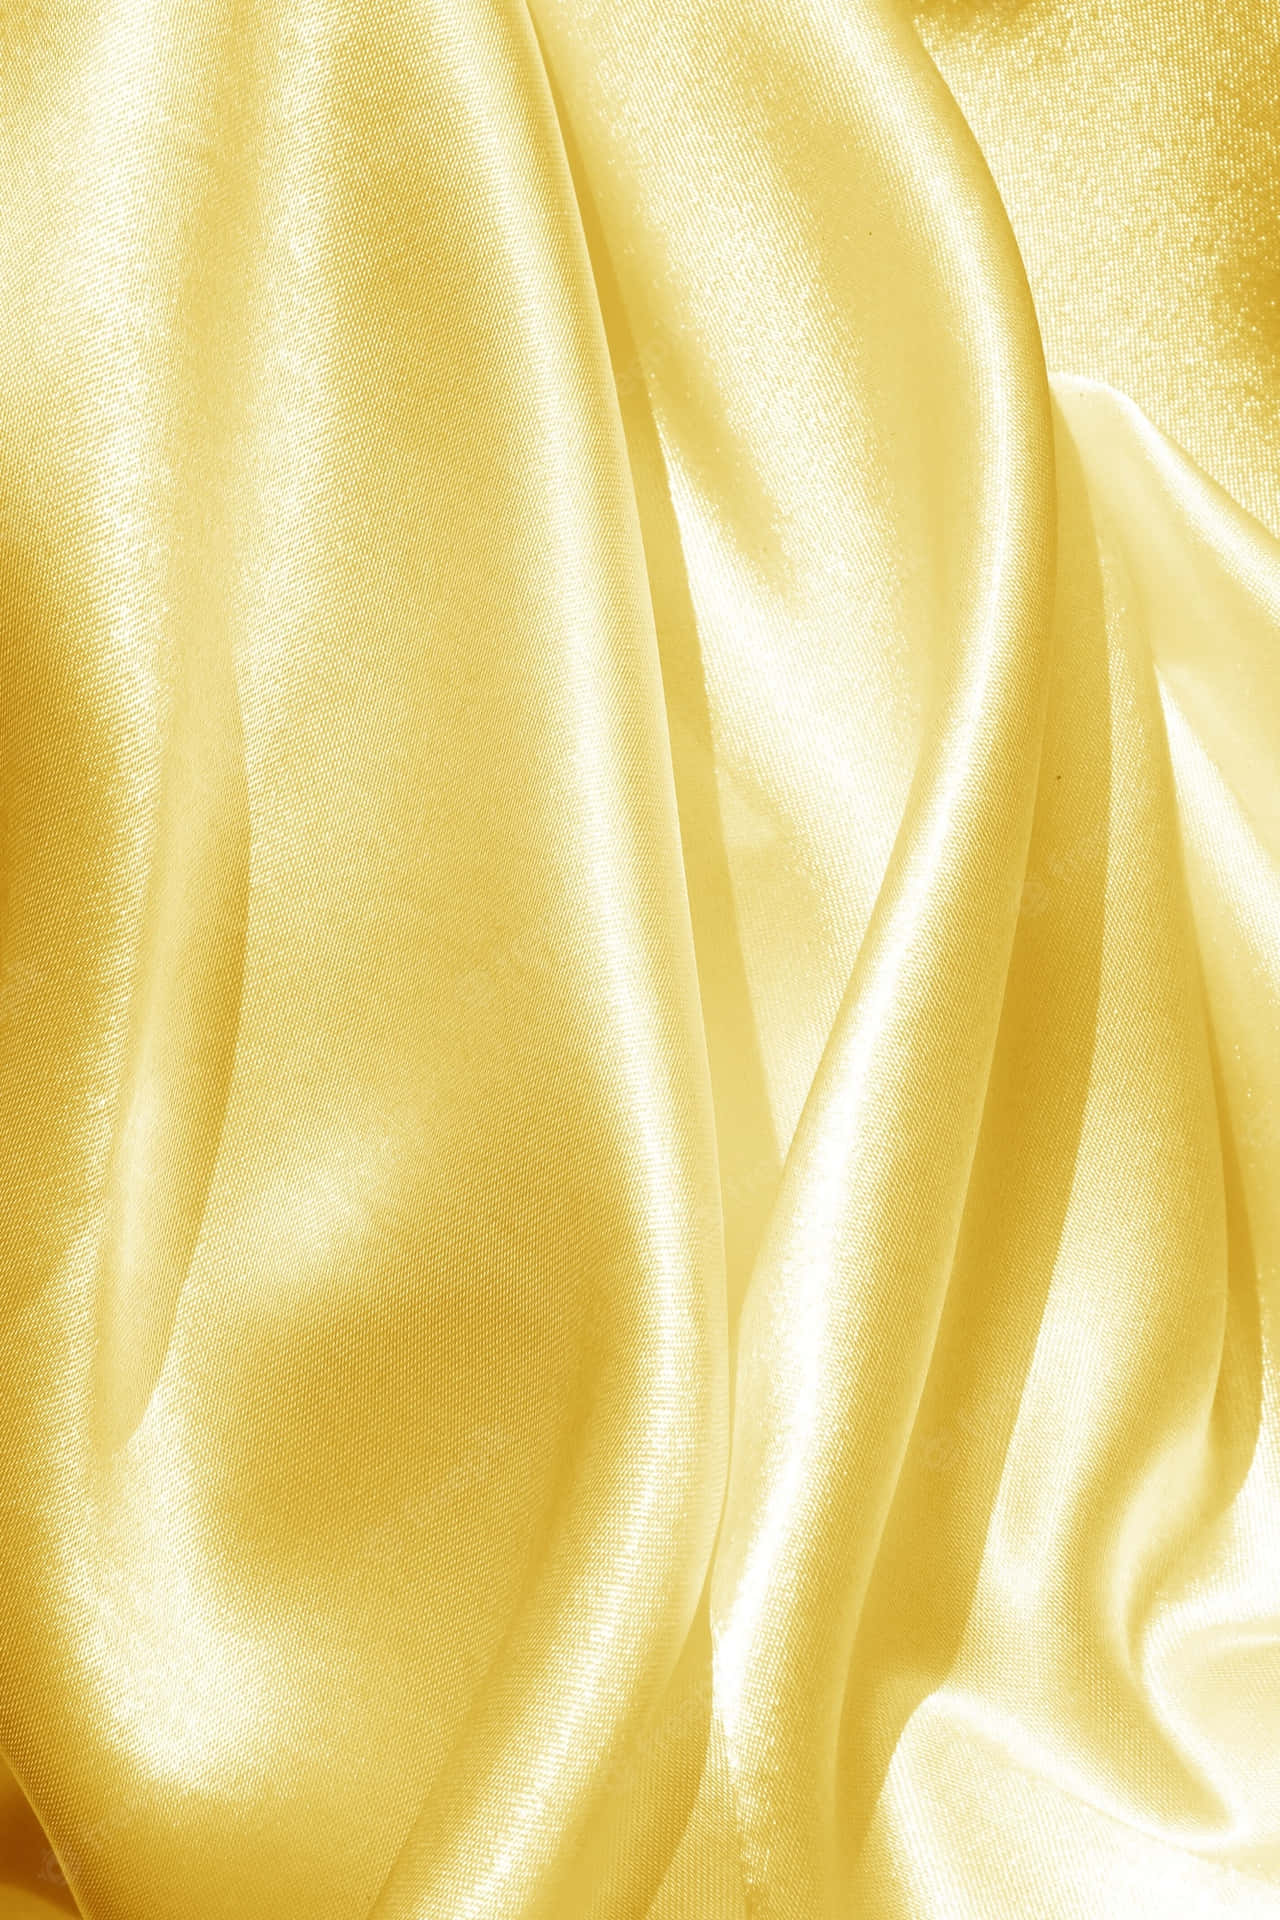 Lassdas Licht Scheinen - Goldseide Wallpaper